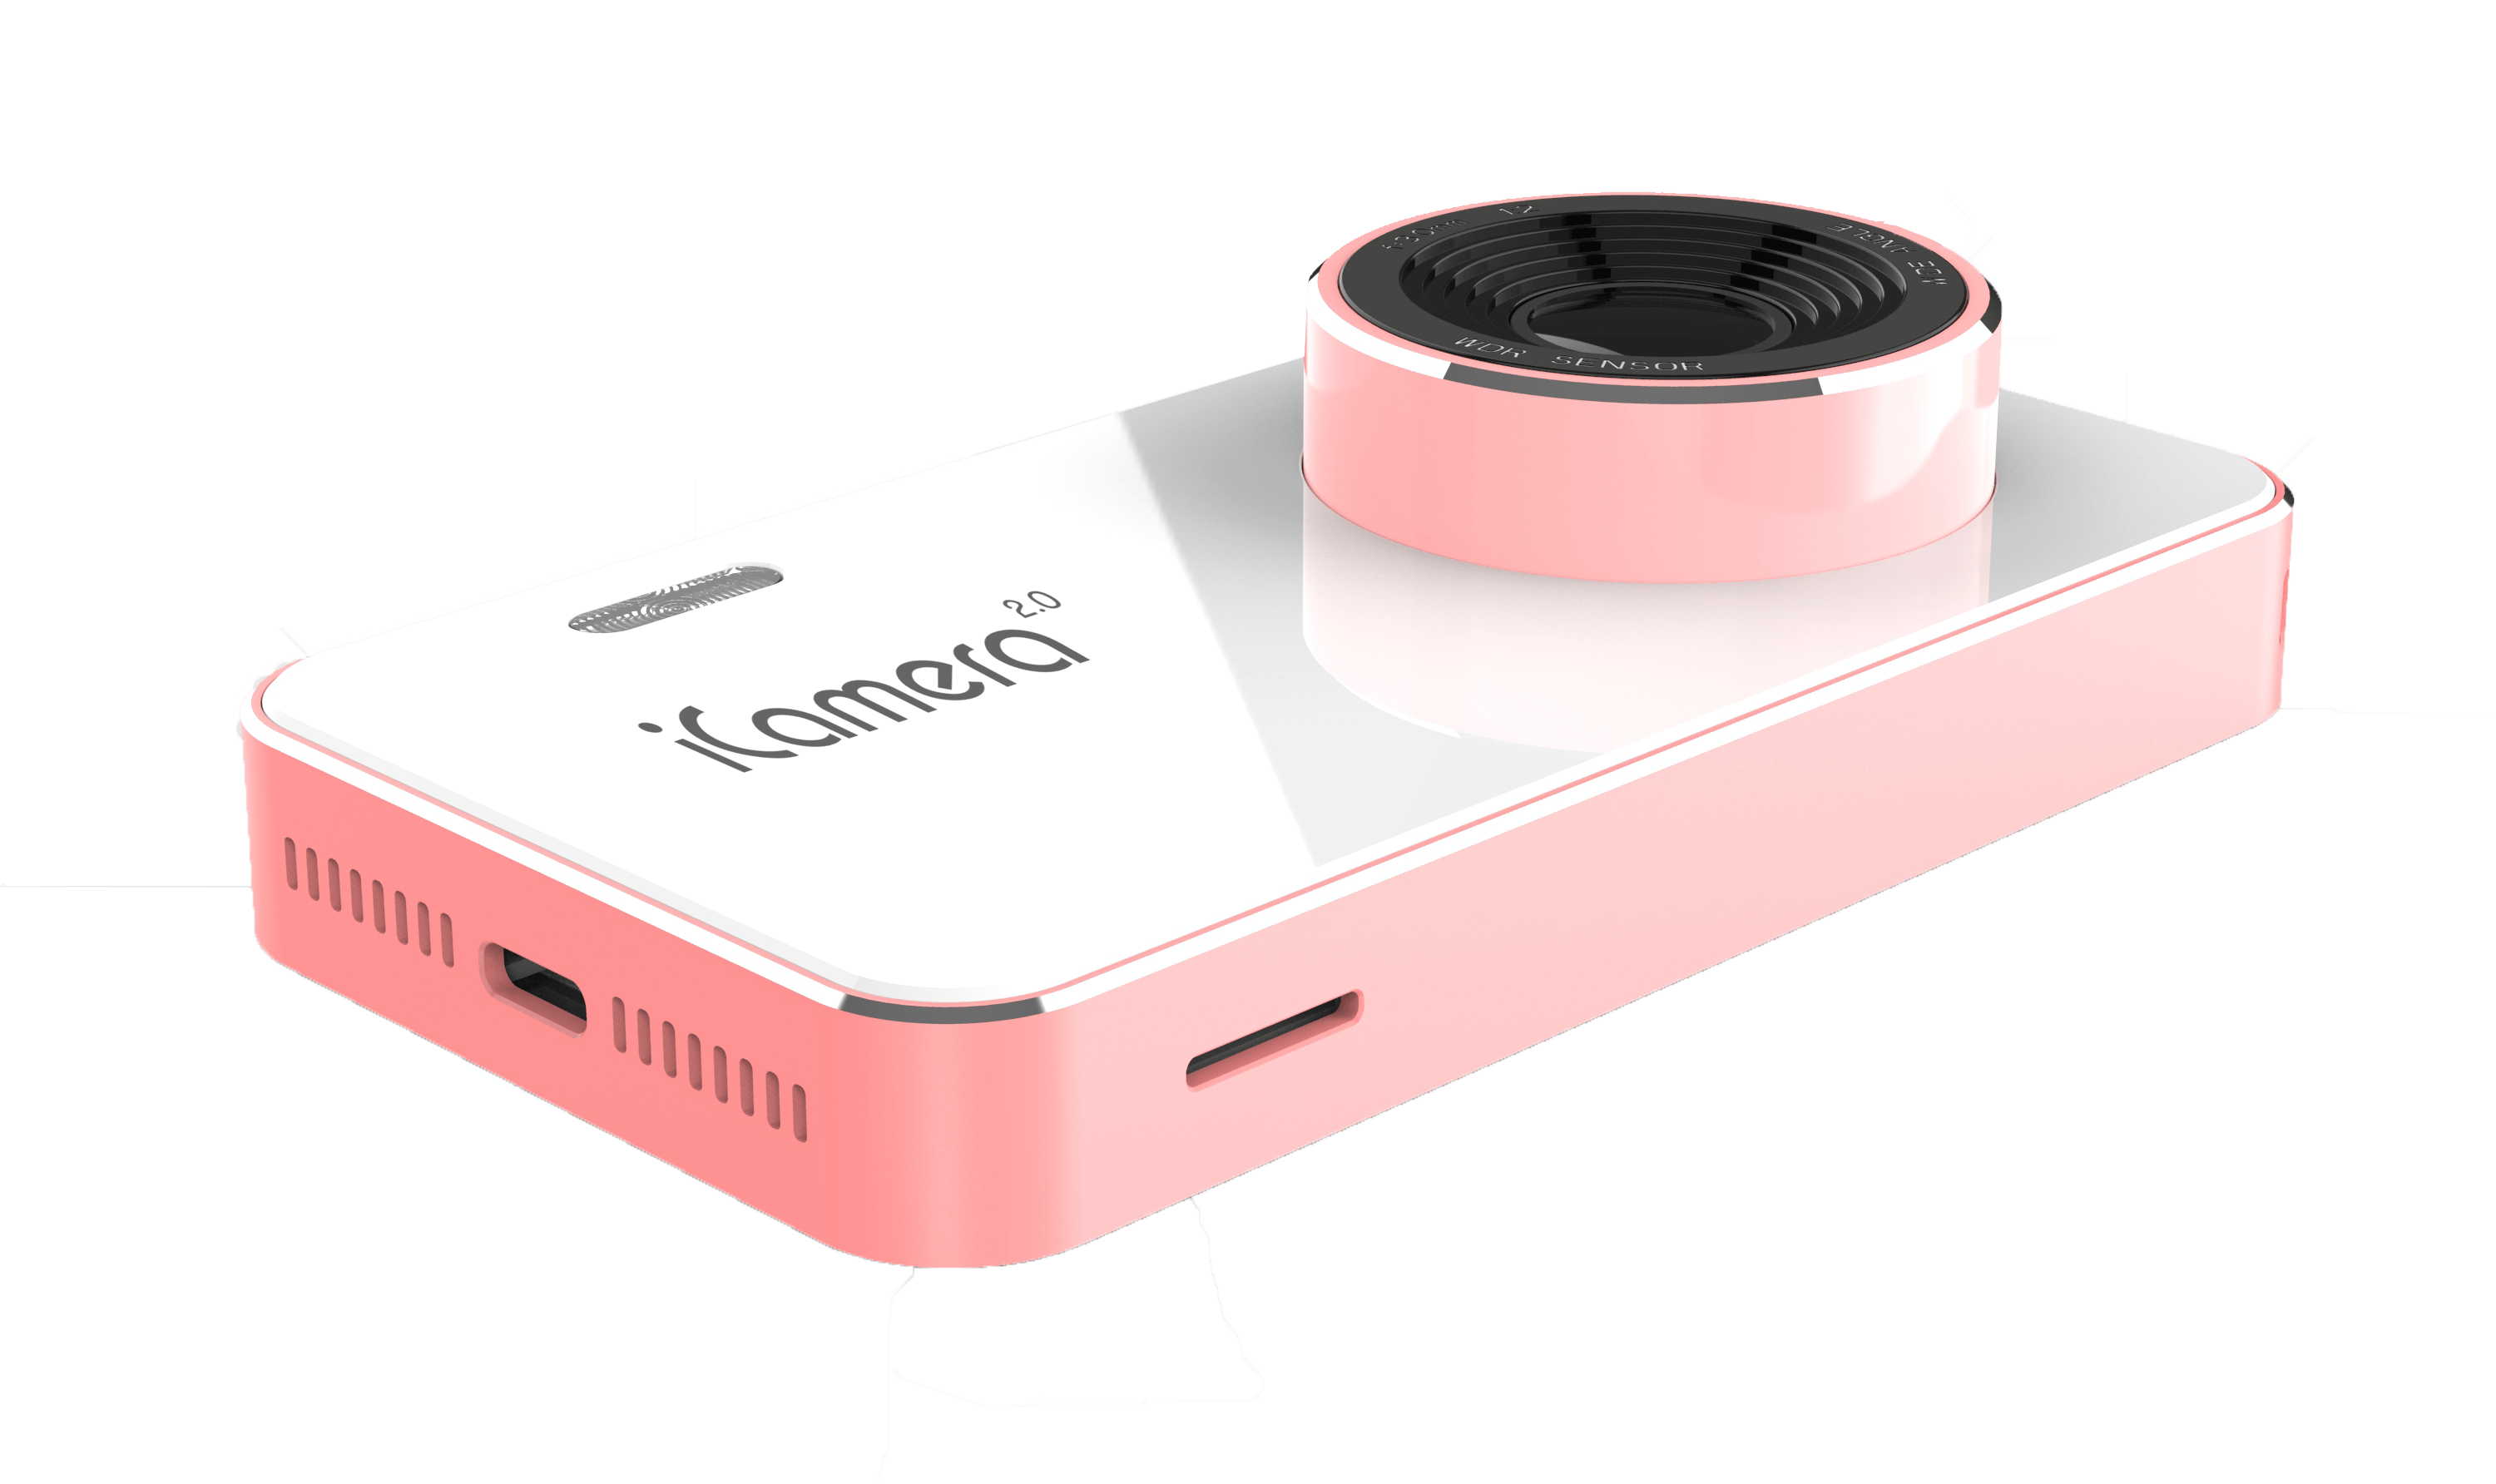 Samvix Kosher iCamera 2.0 - Pink